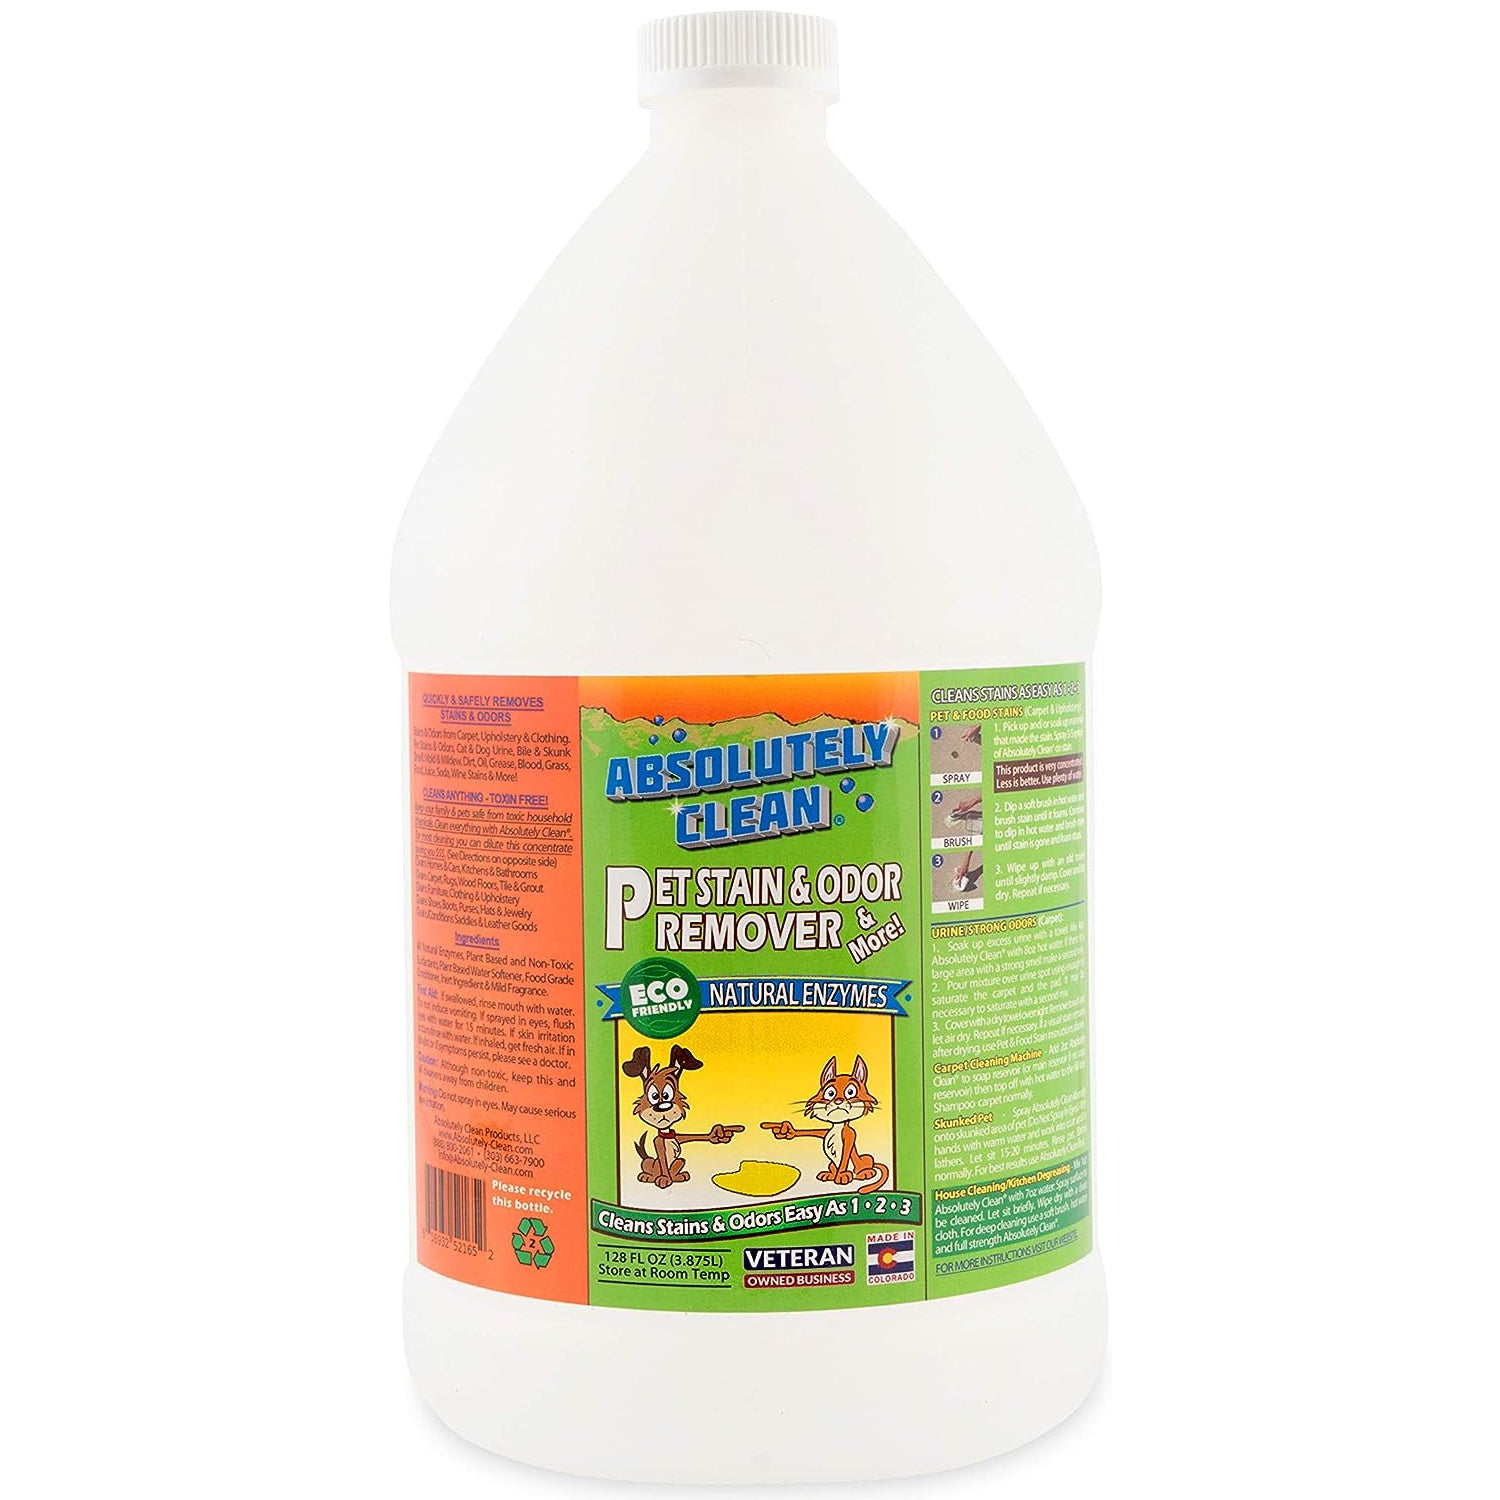  Resolve Urine Destroyer Spray Stain & Odor Remover,  Transparent, No Flavor, 32 Fl Oz : Pet Supplies